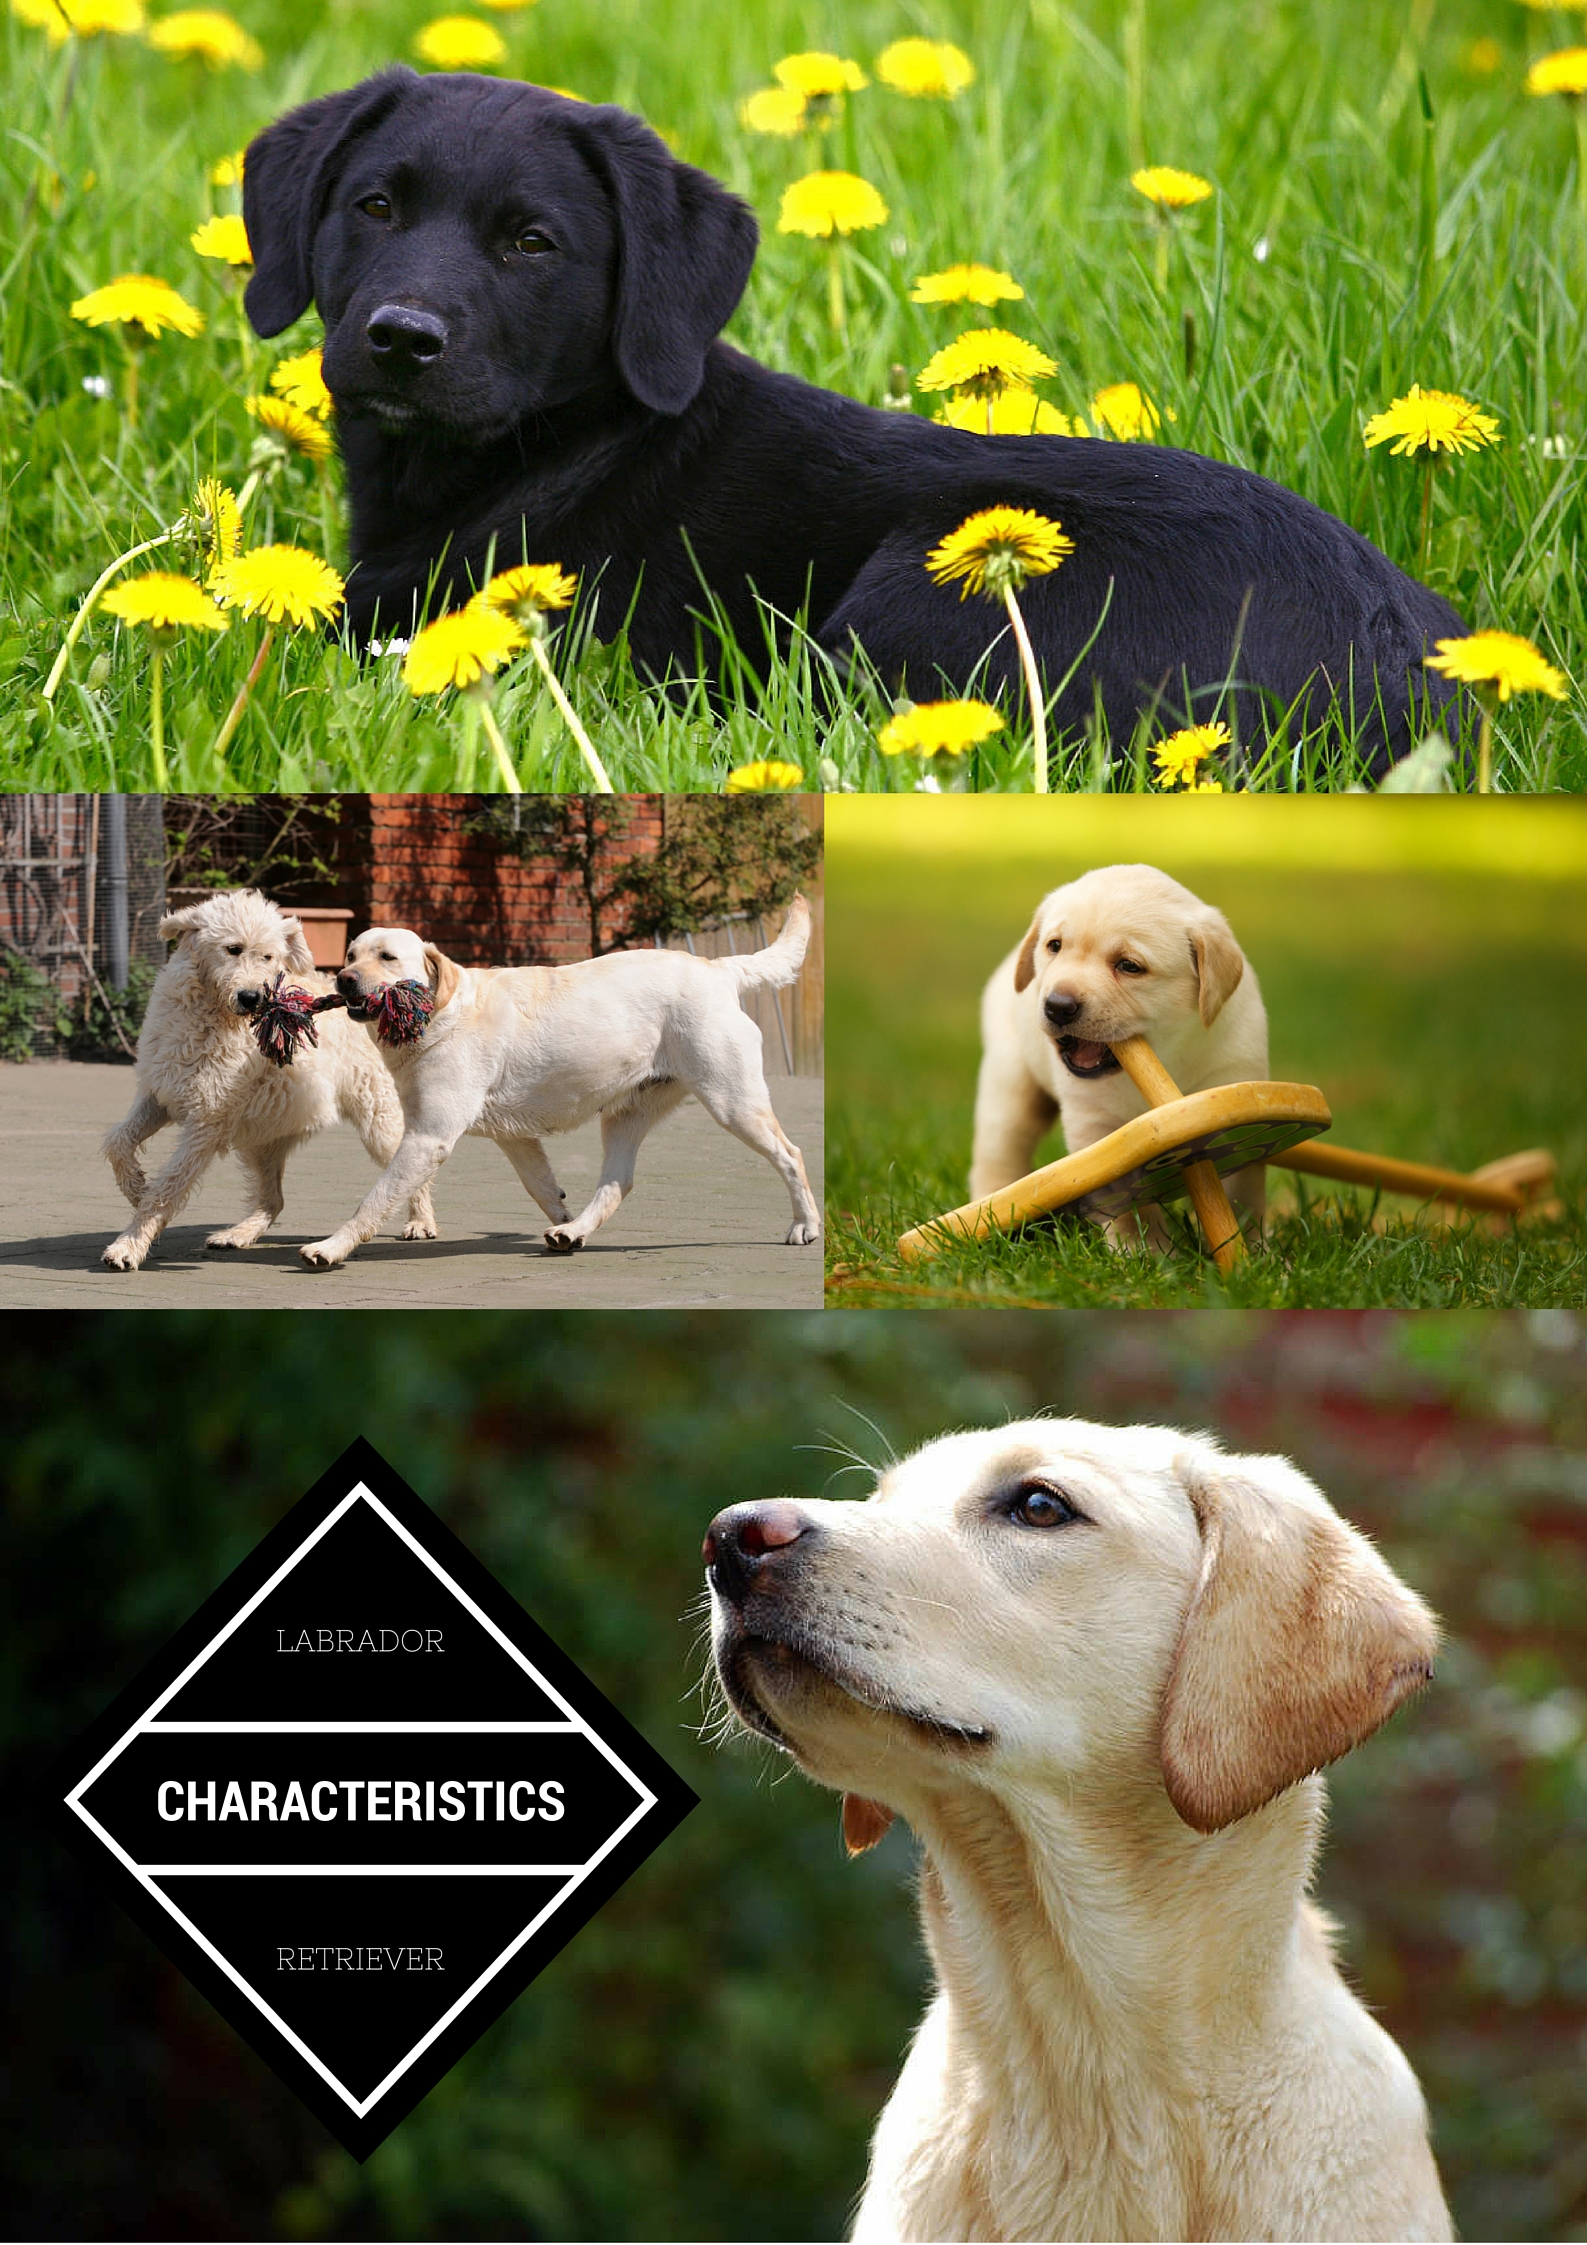 What are the characteristics of a small Labrador retriever?